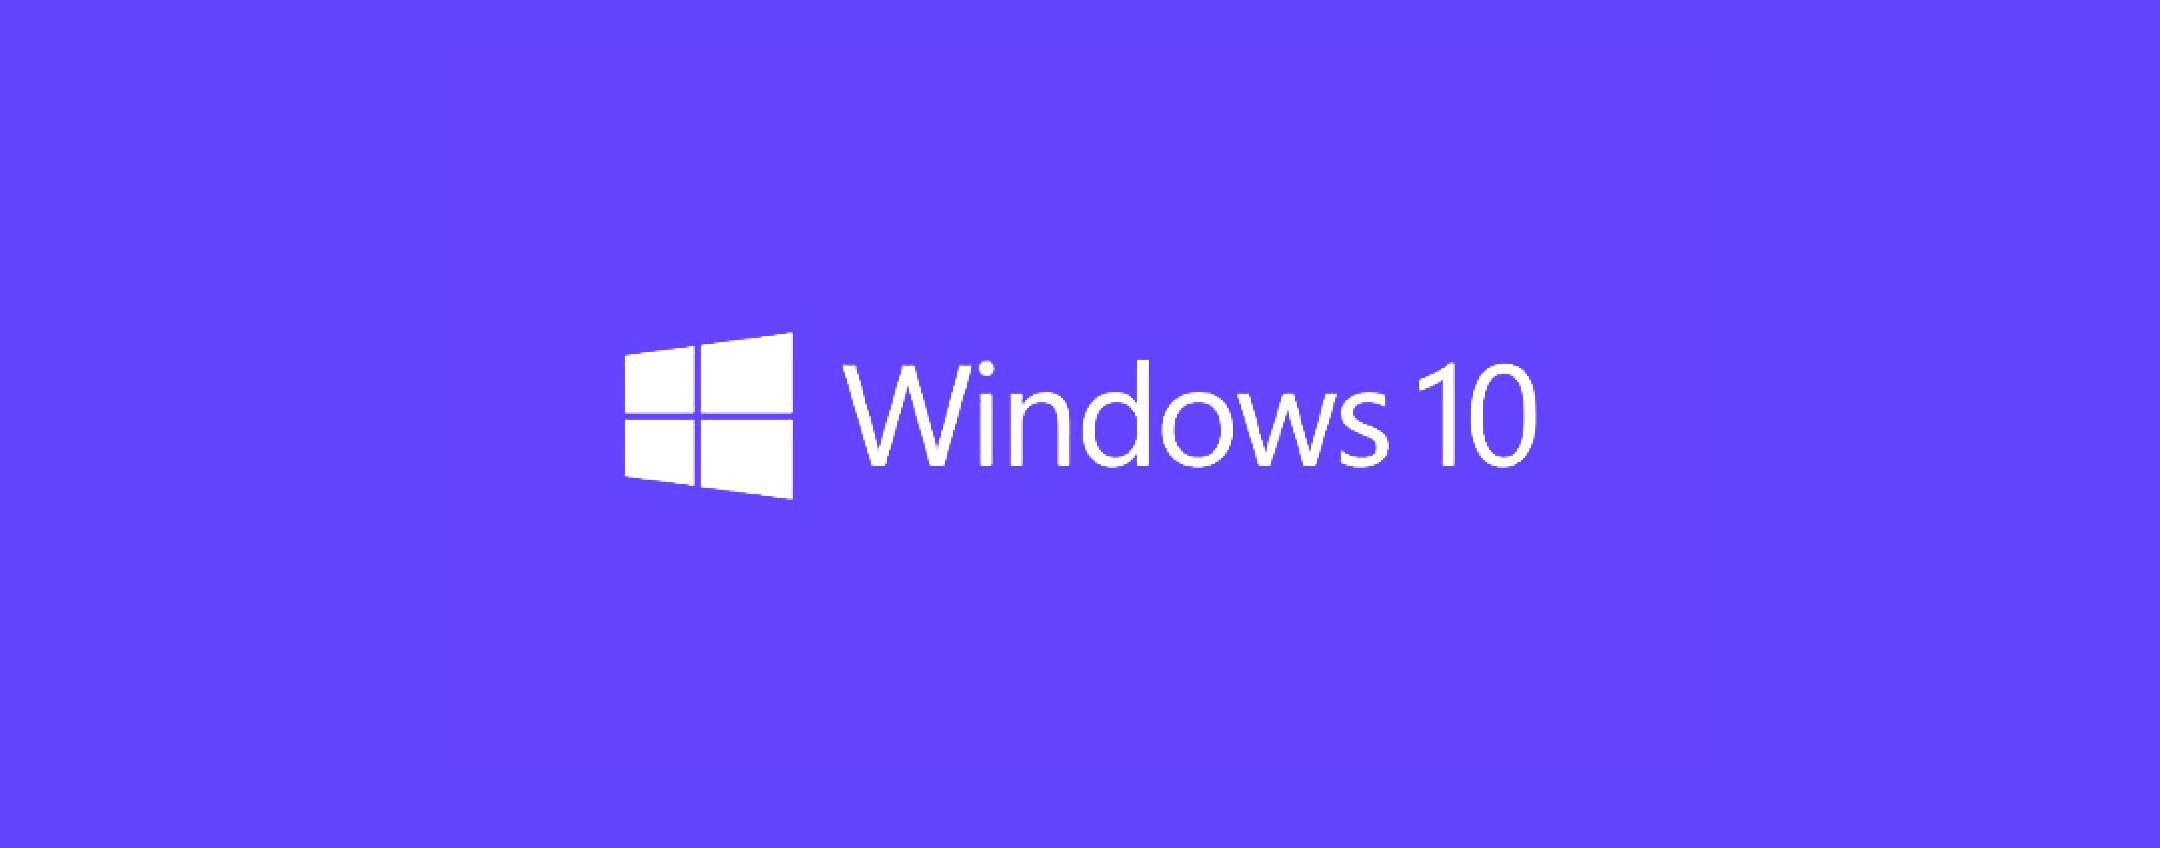 Windows 10 sicurezza bambini internet